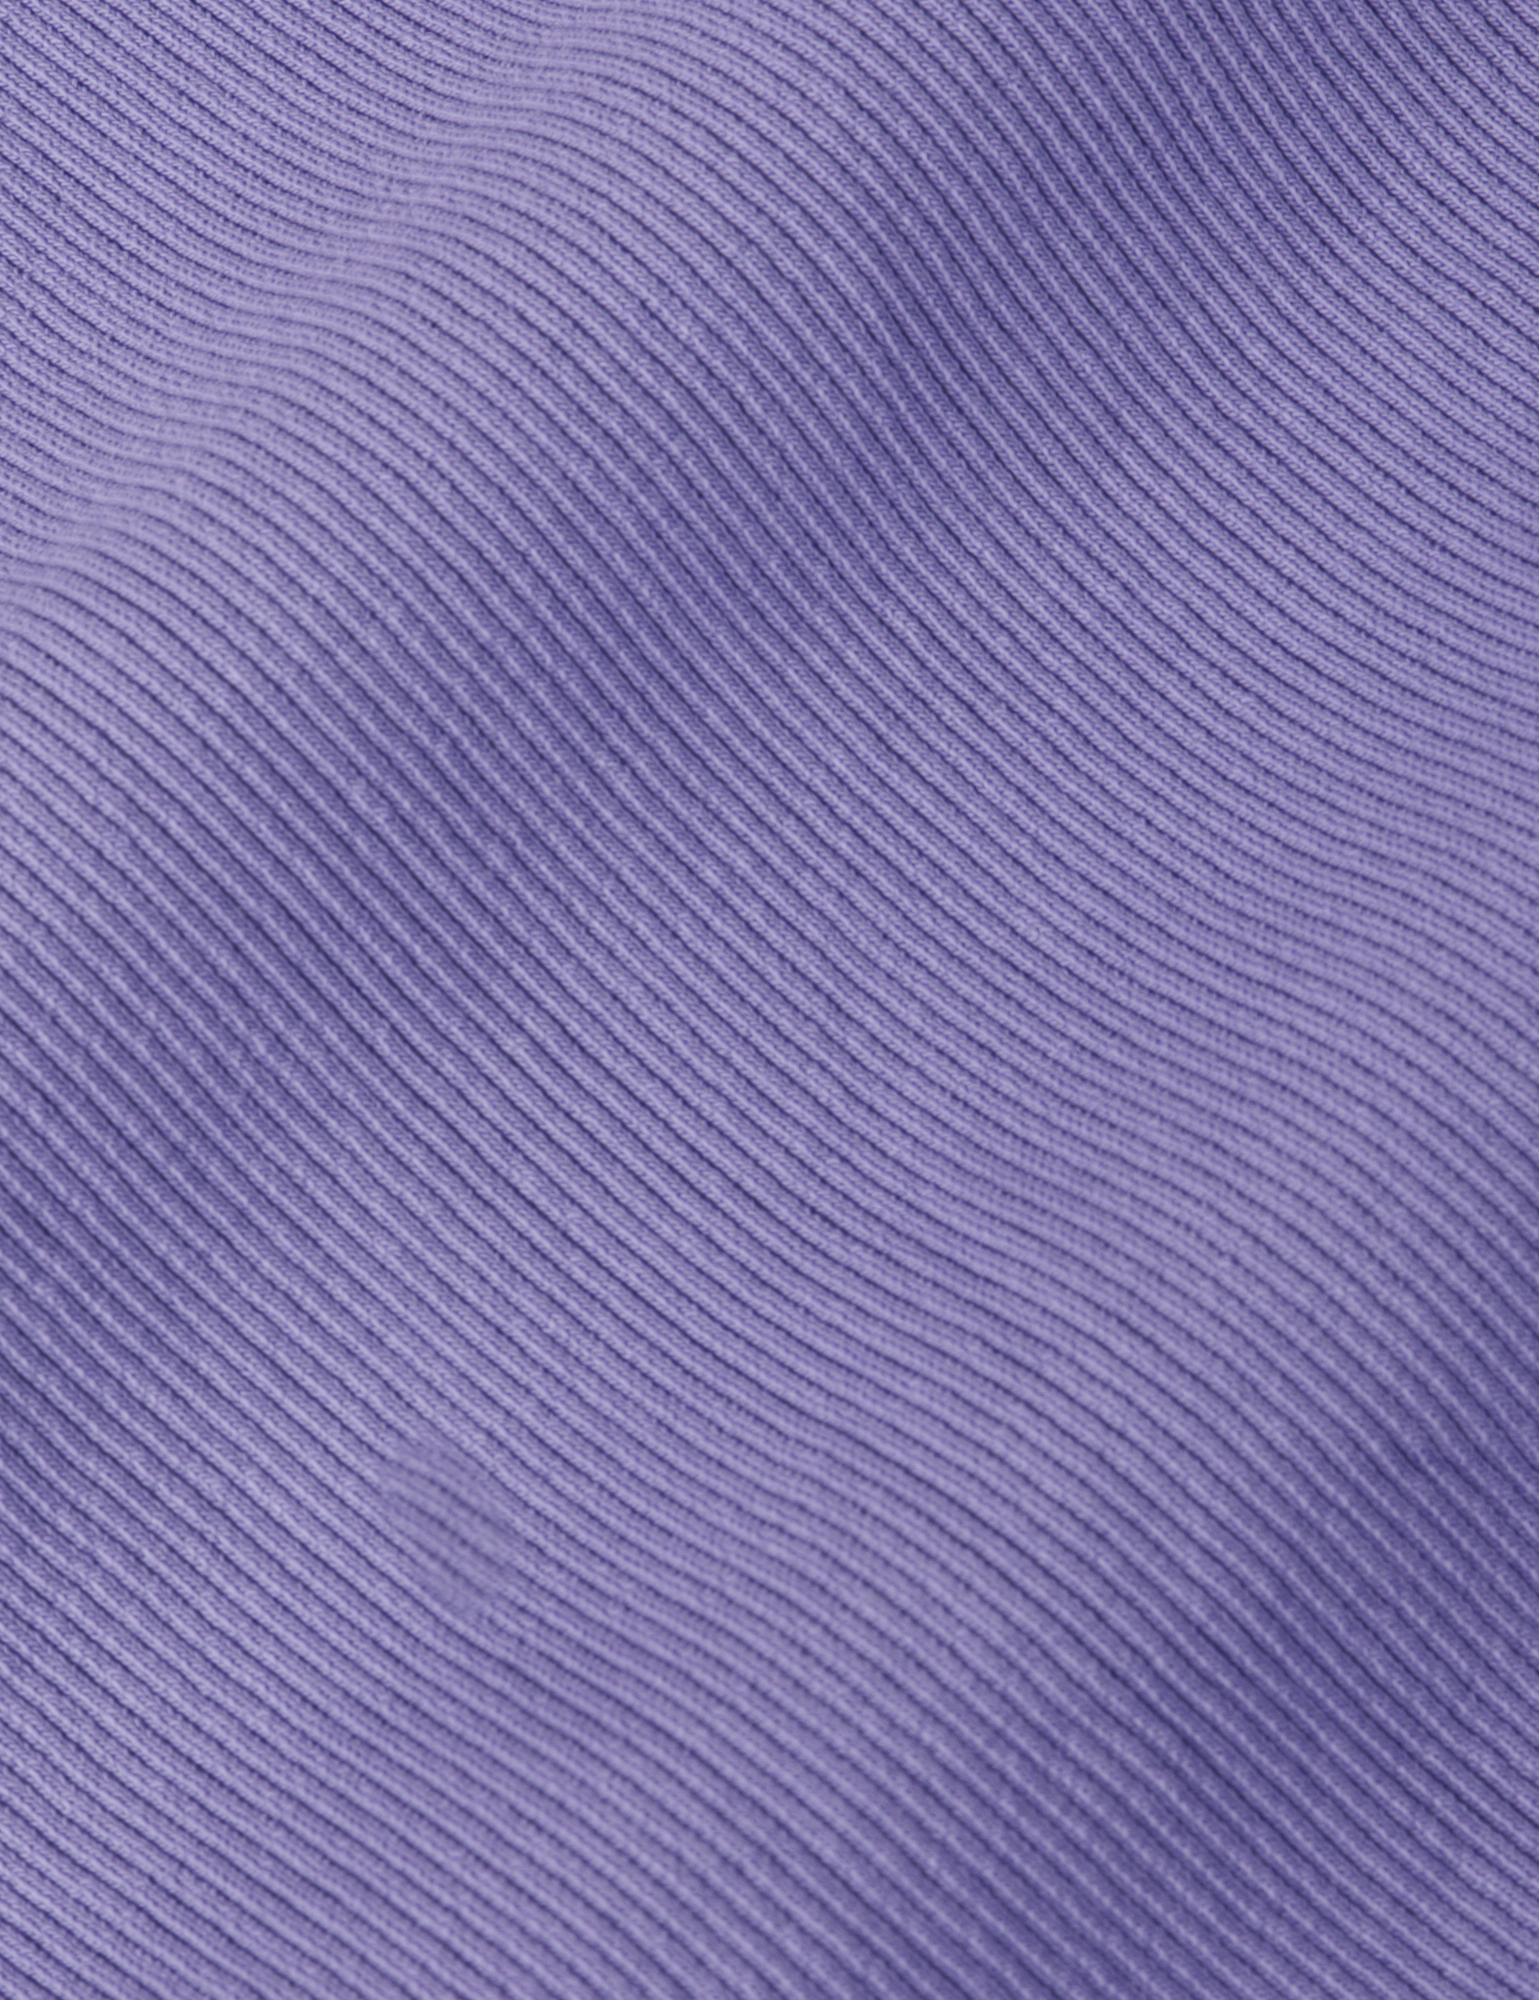 Essential Turtleneck in Faded Grape fabric